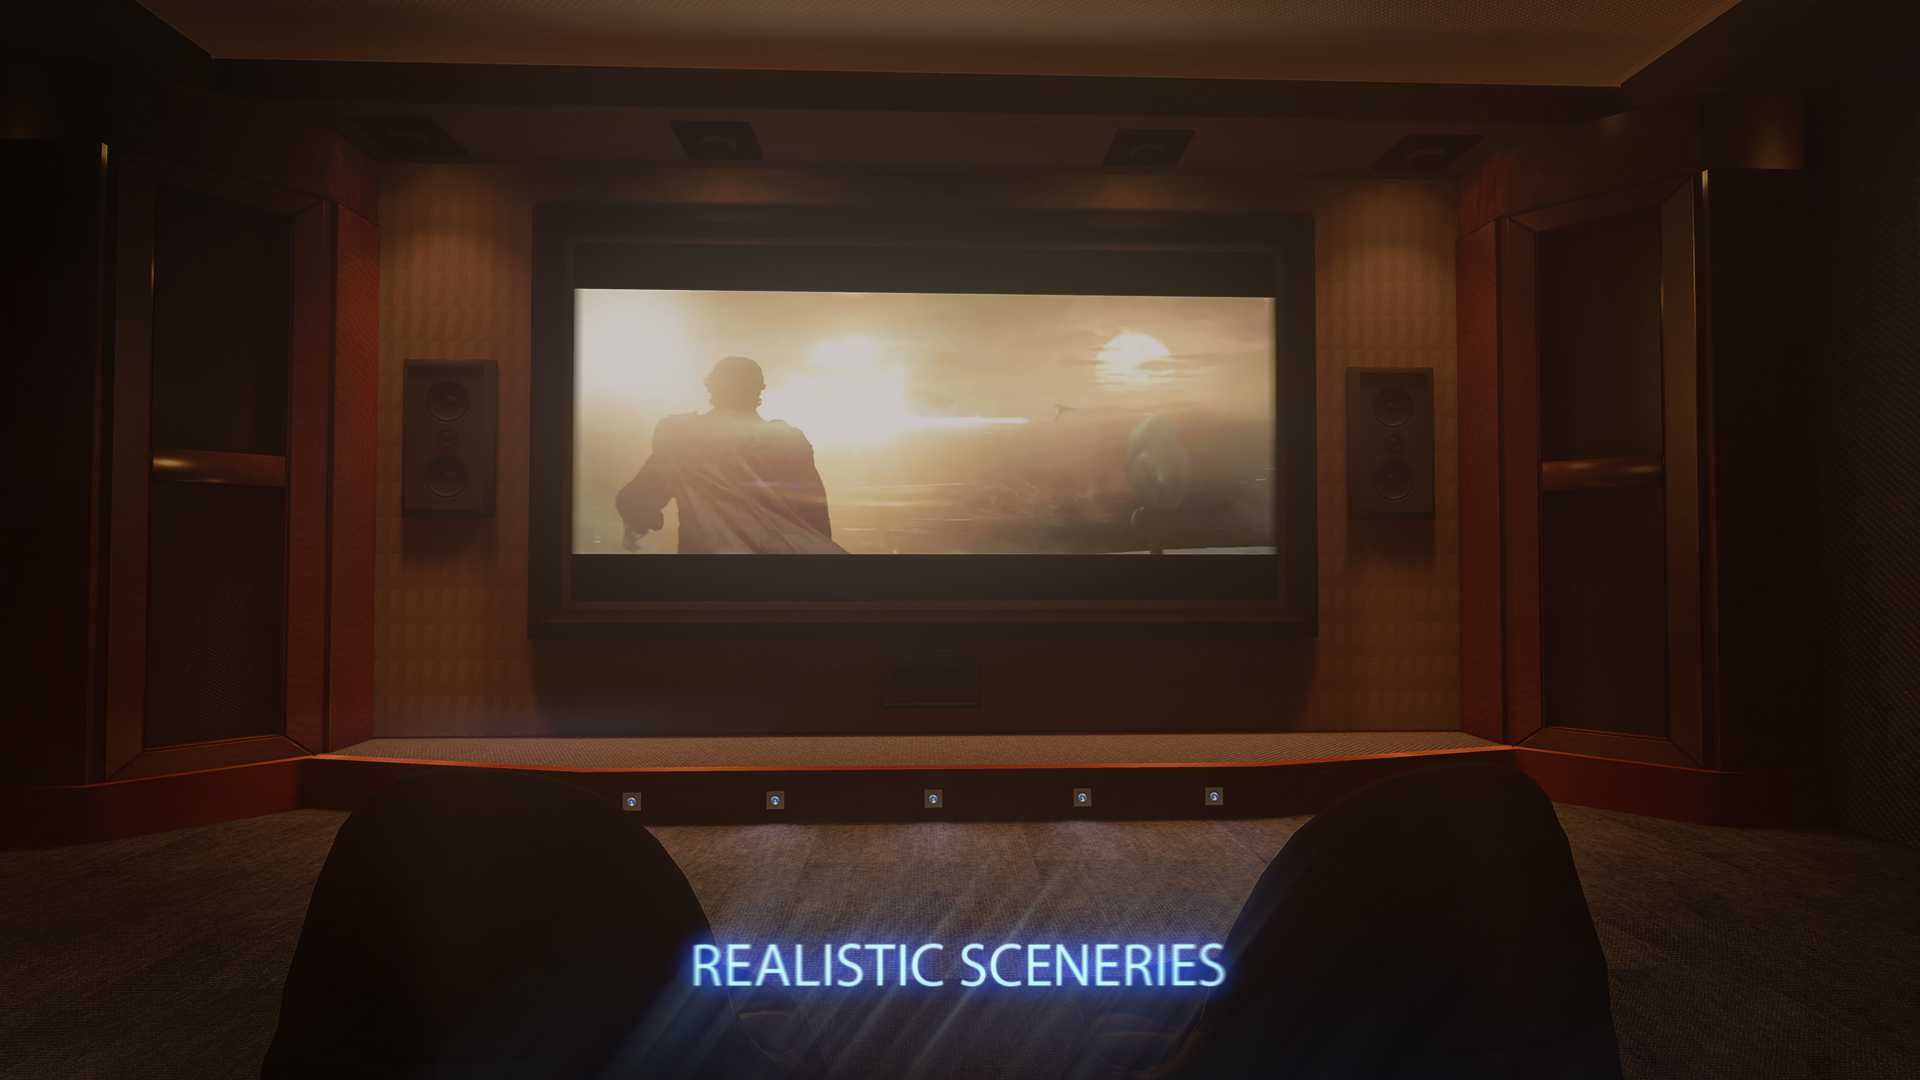 Cmoar VR Cinema